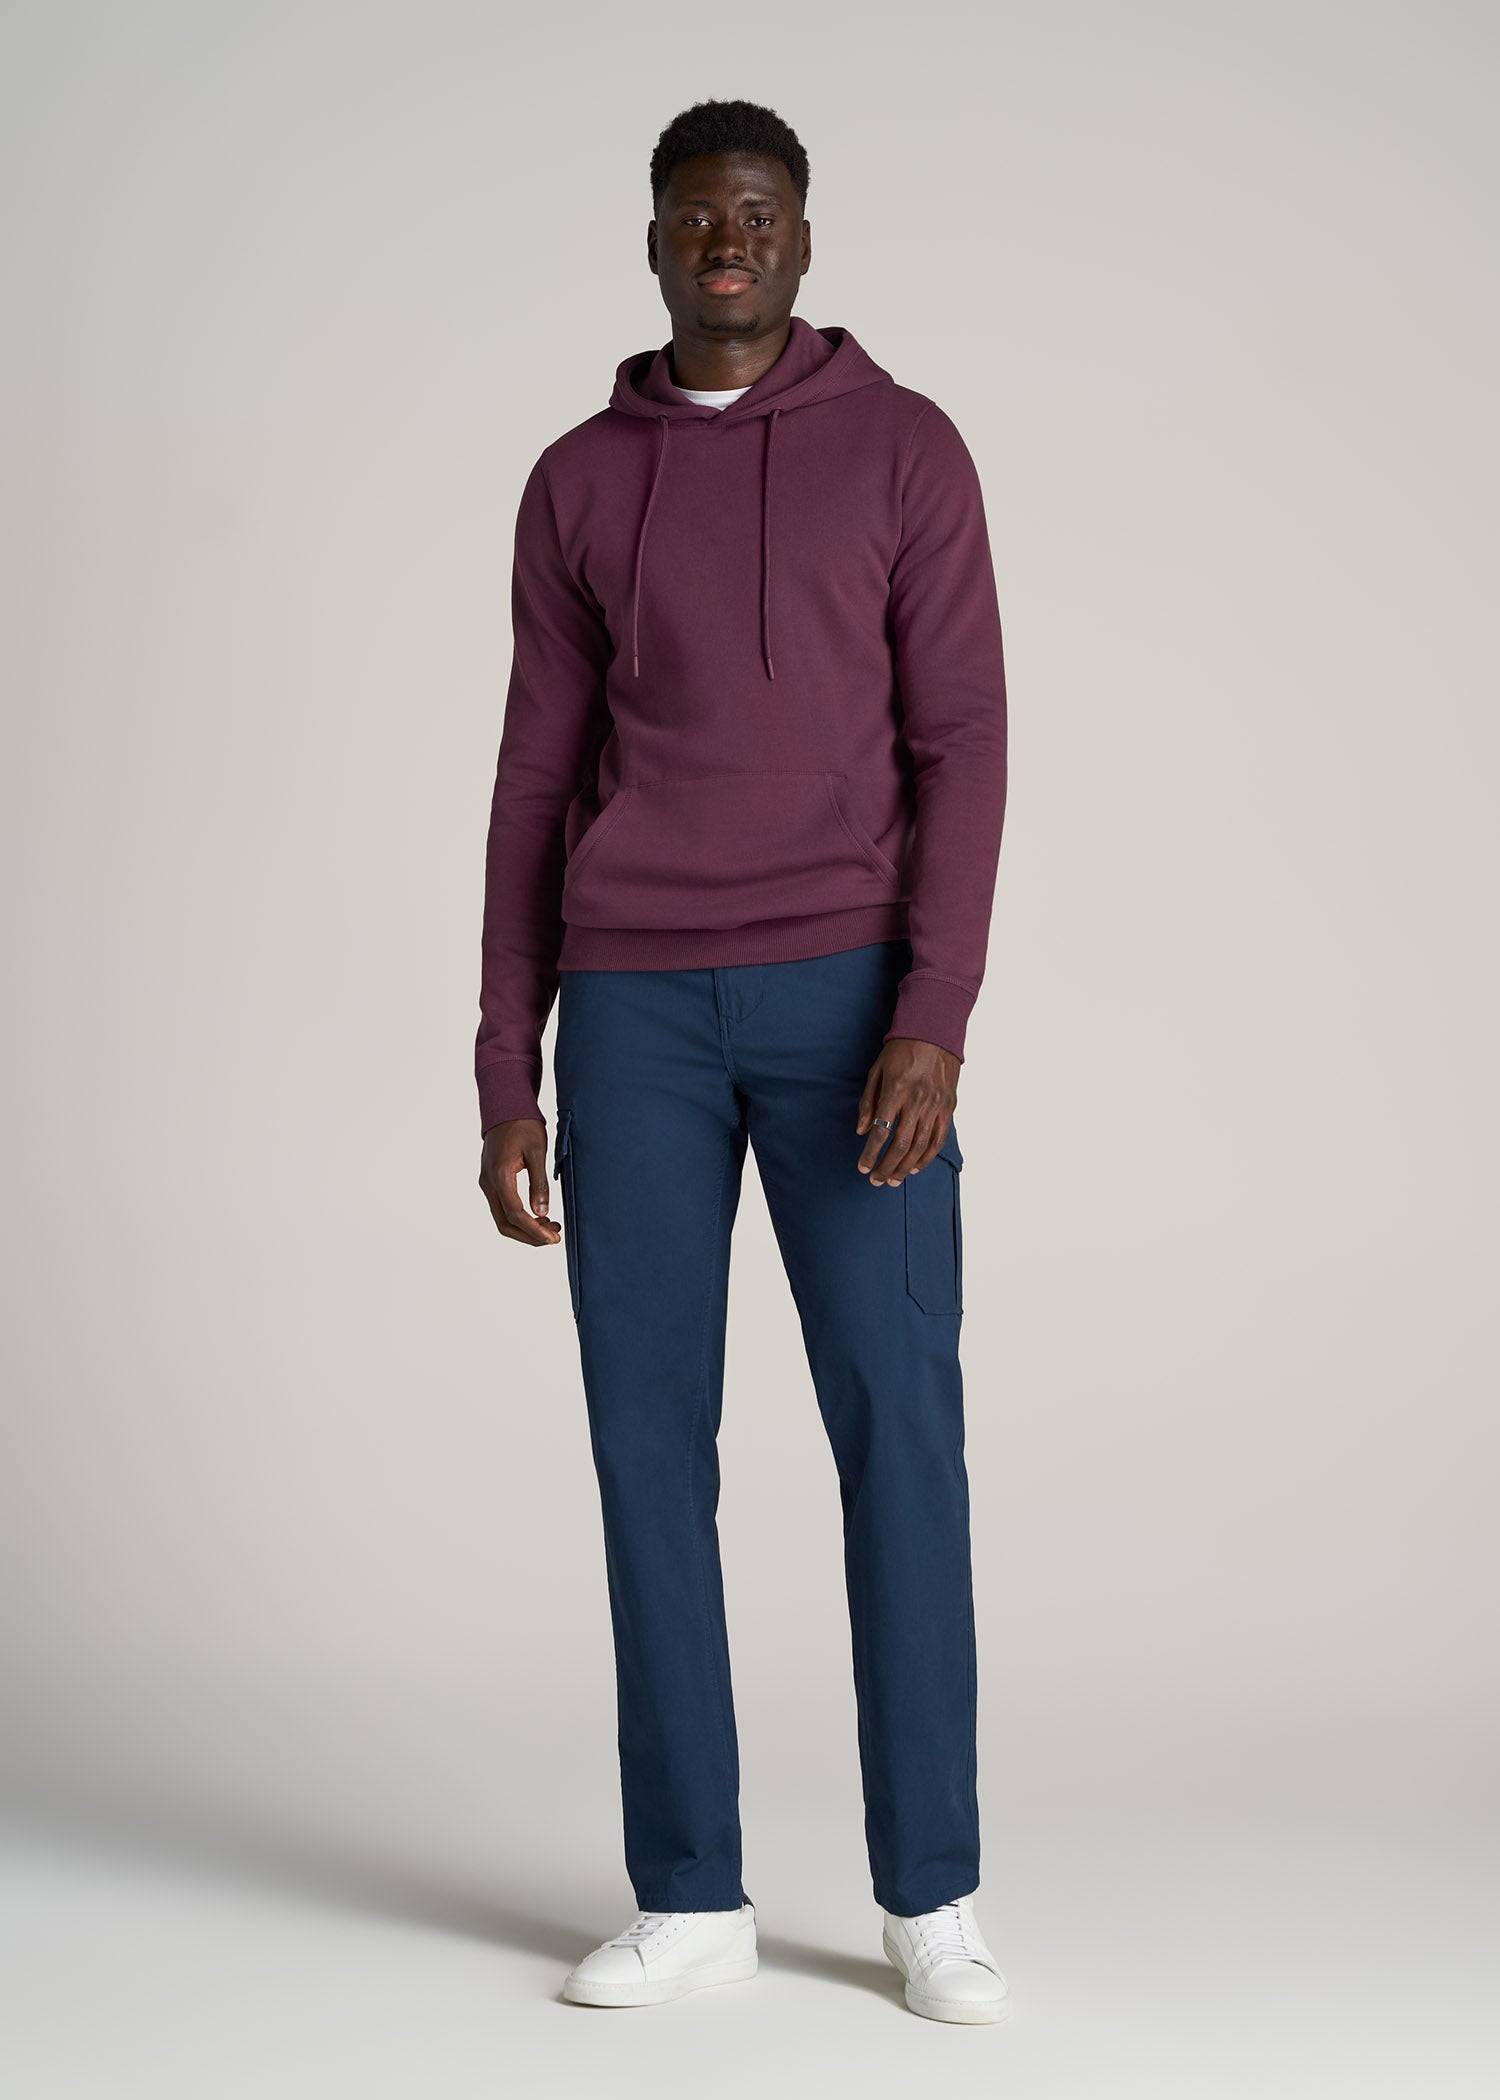 Men's Tall Hoodies & Sweatshirts | American Tall